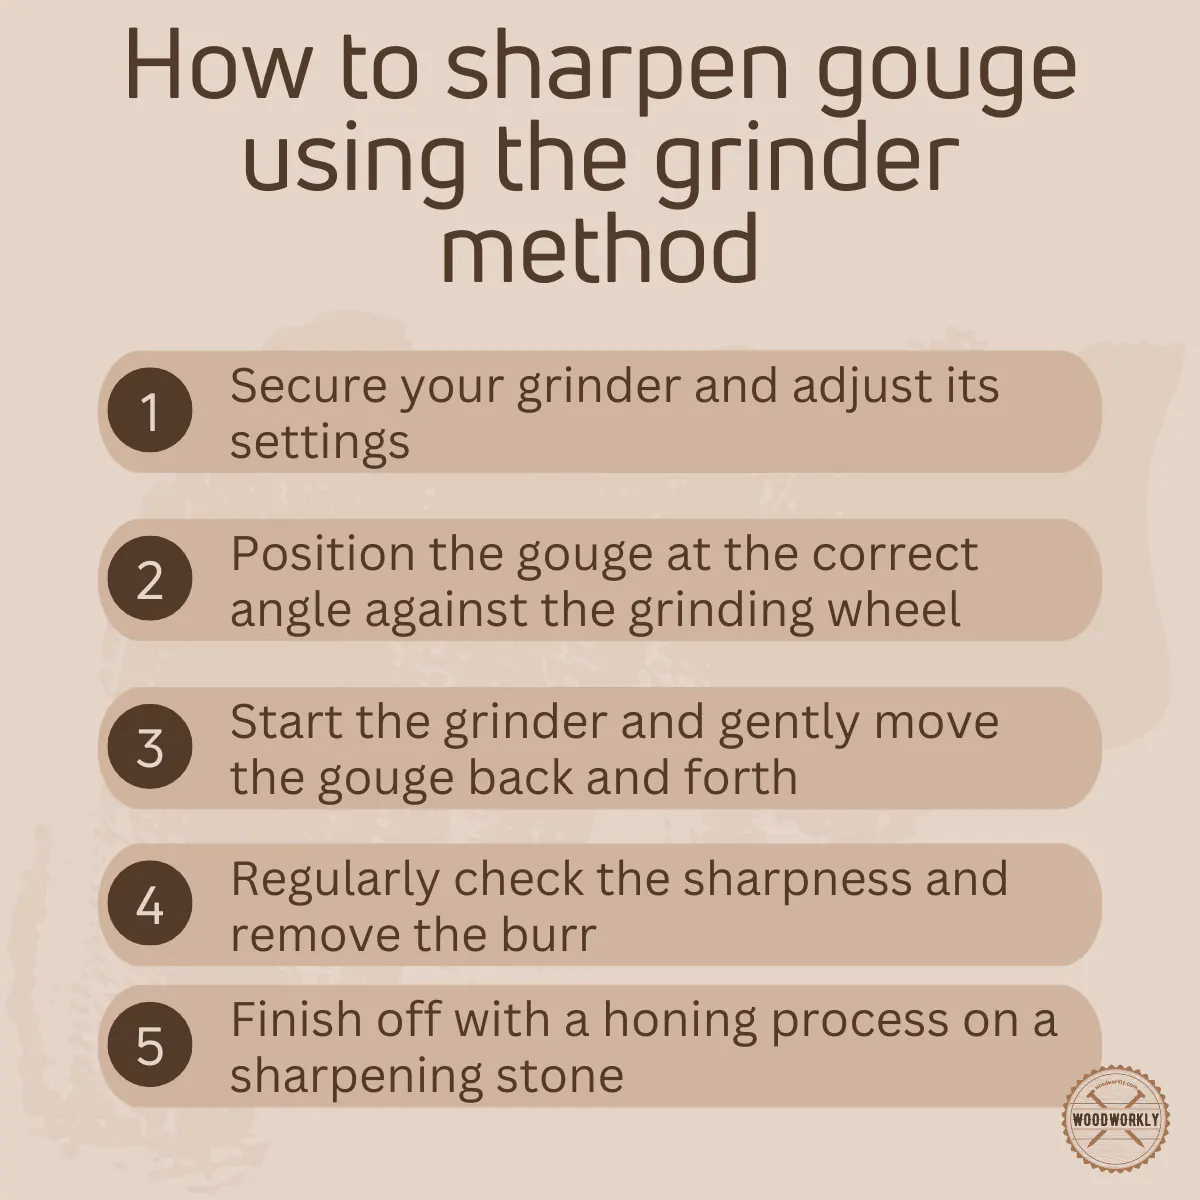 How to sharpen gouge using the grinder method